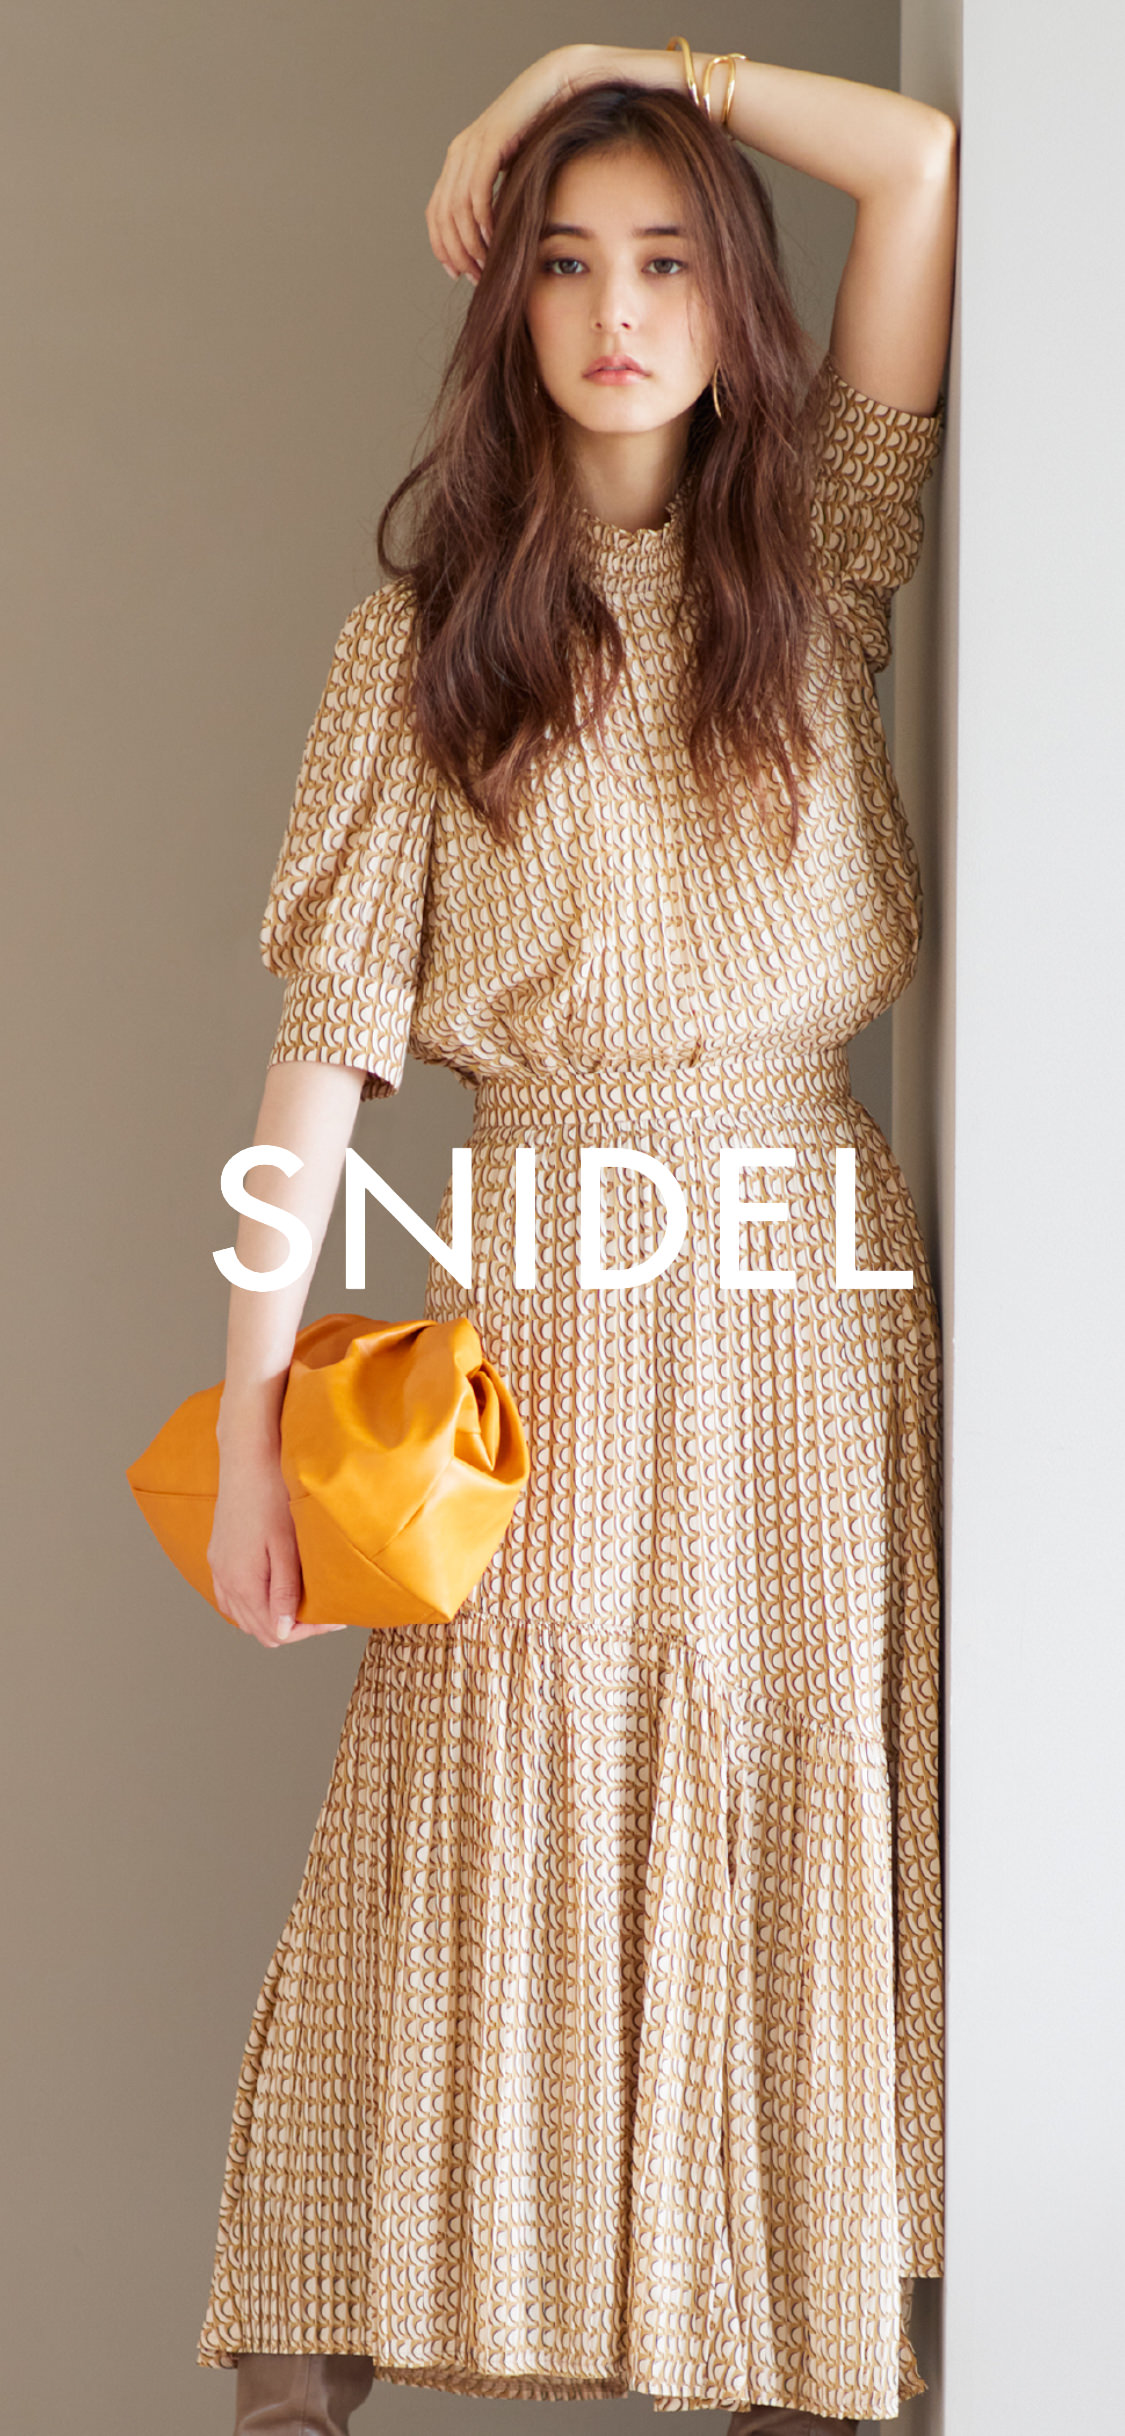 snidel29 - スナイデル/SNIDELの無料高画質スマホ壁紙61枚 [iPhone＆Androidに対応]